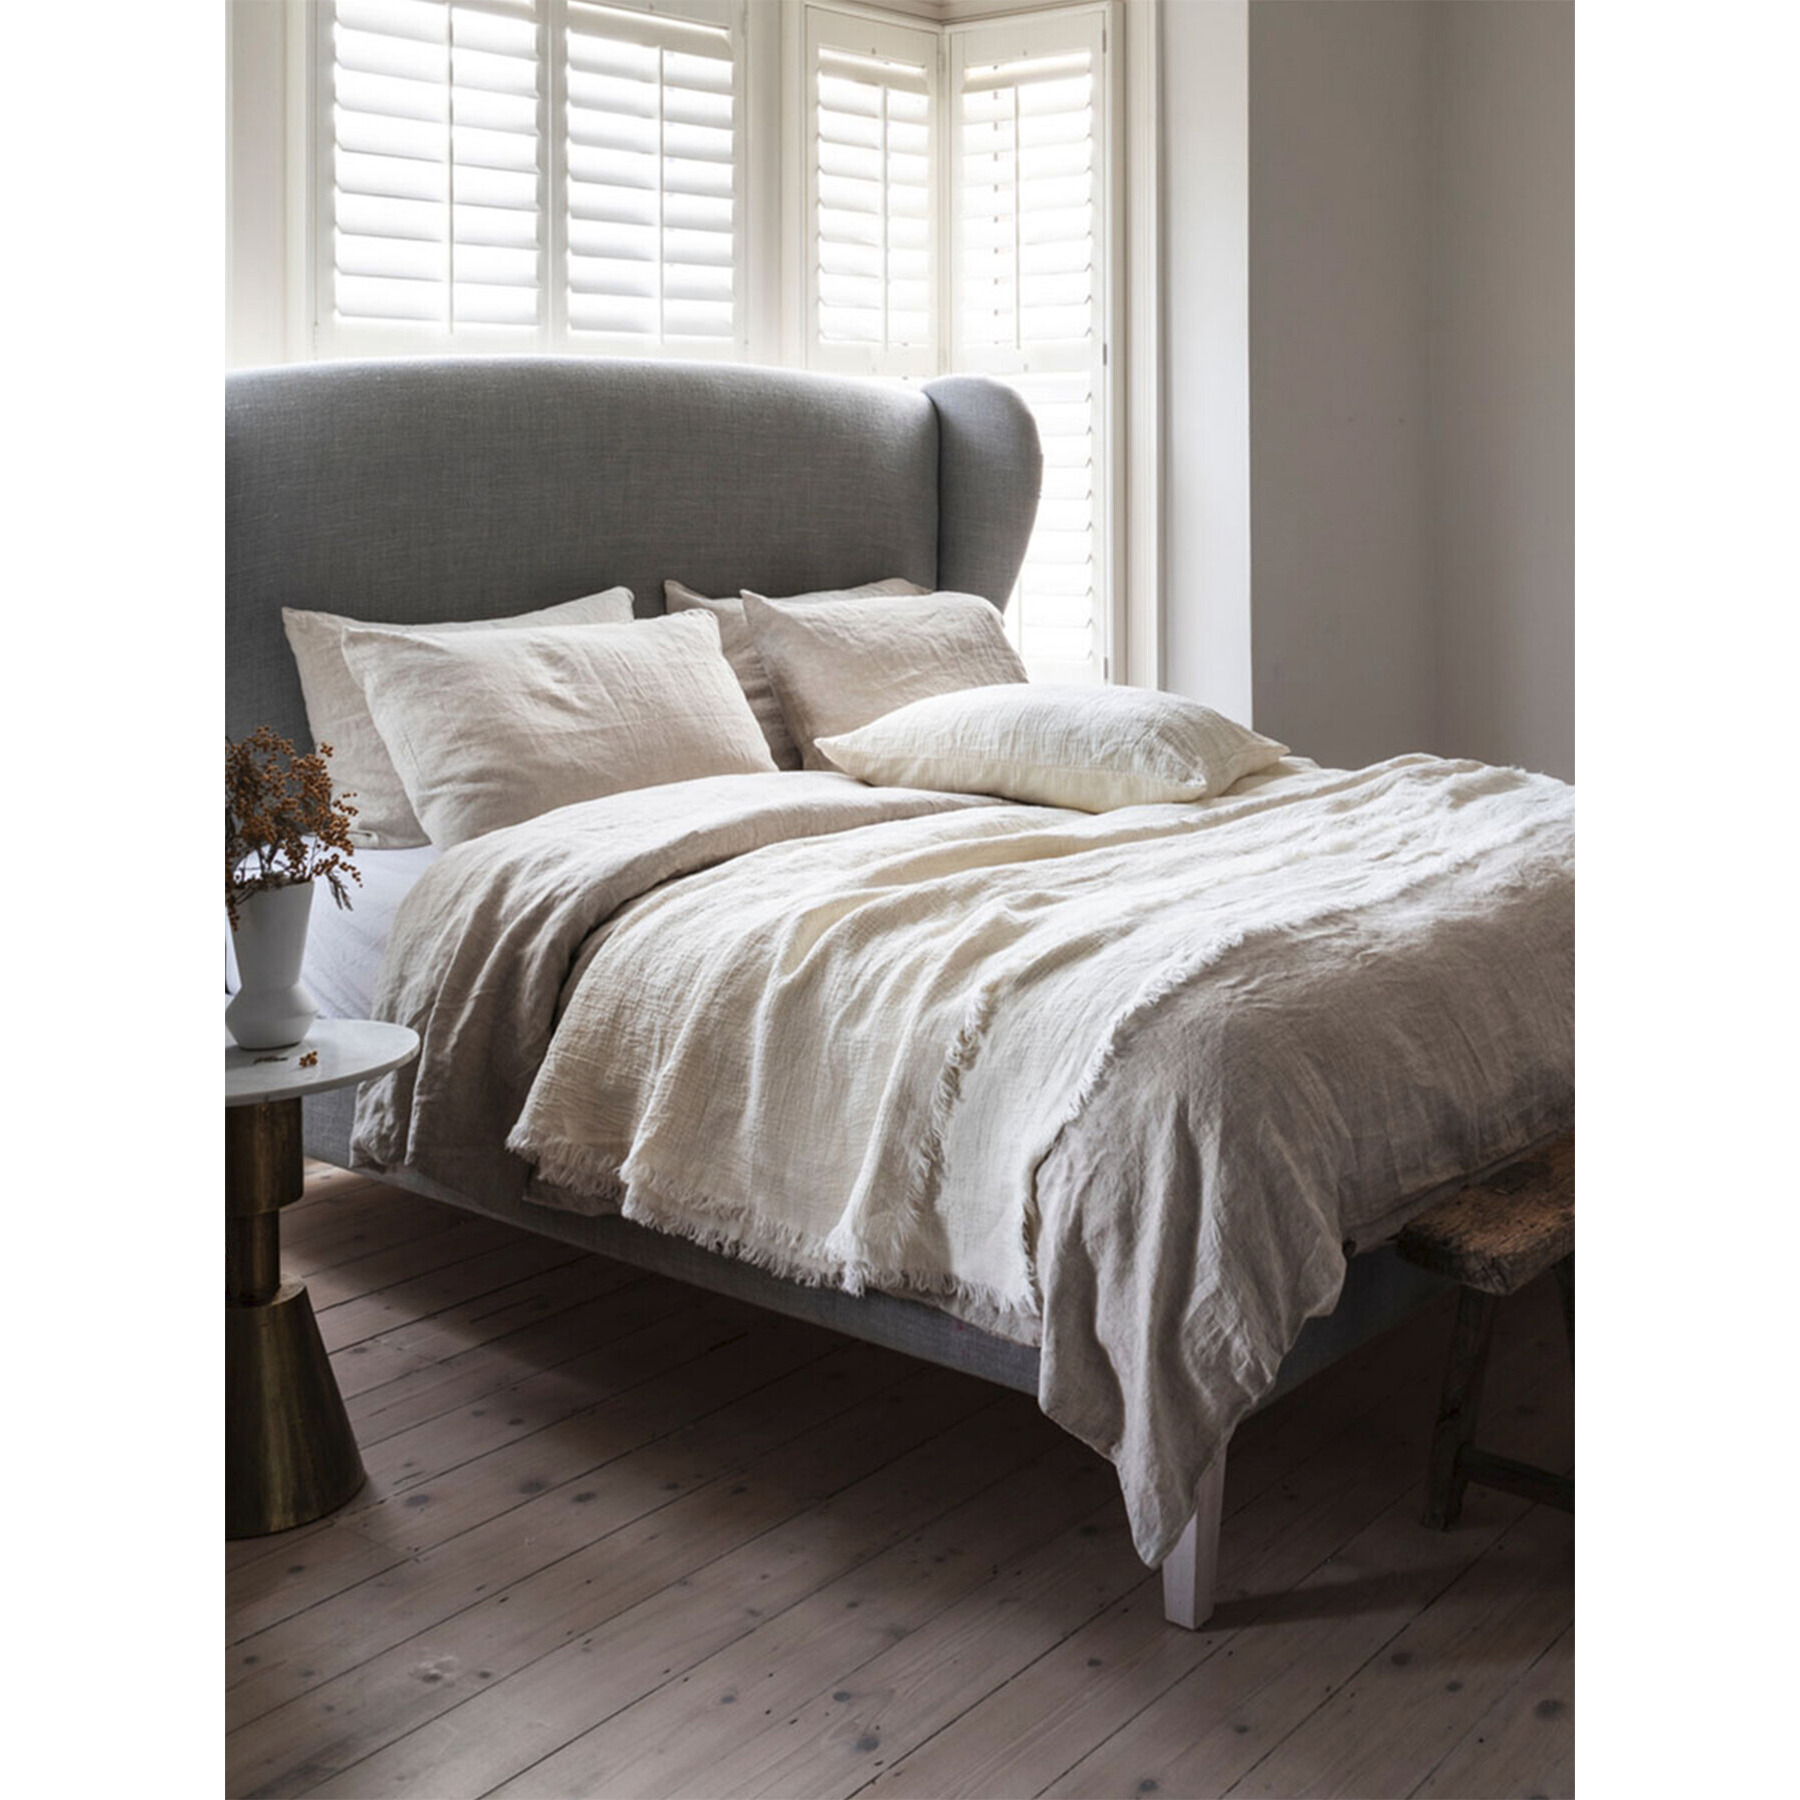 Piglet in Bed Linen Flat Sheet - Size Single Neutral - image 1